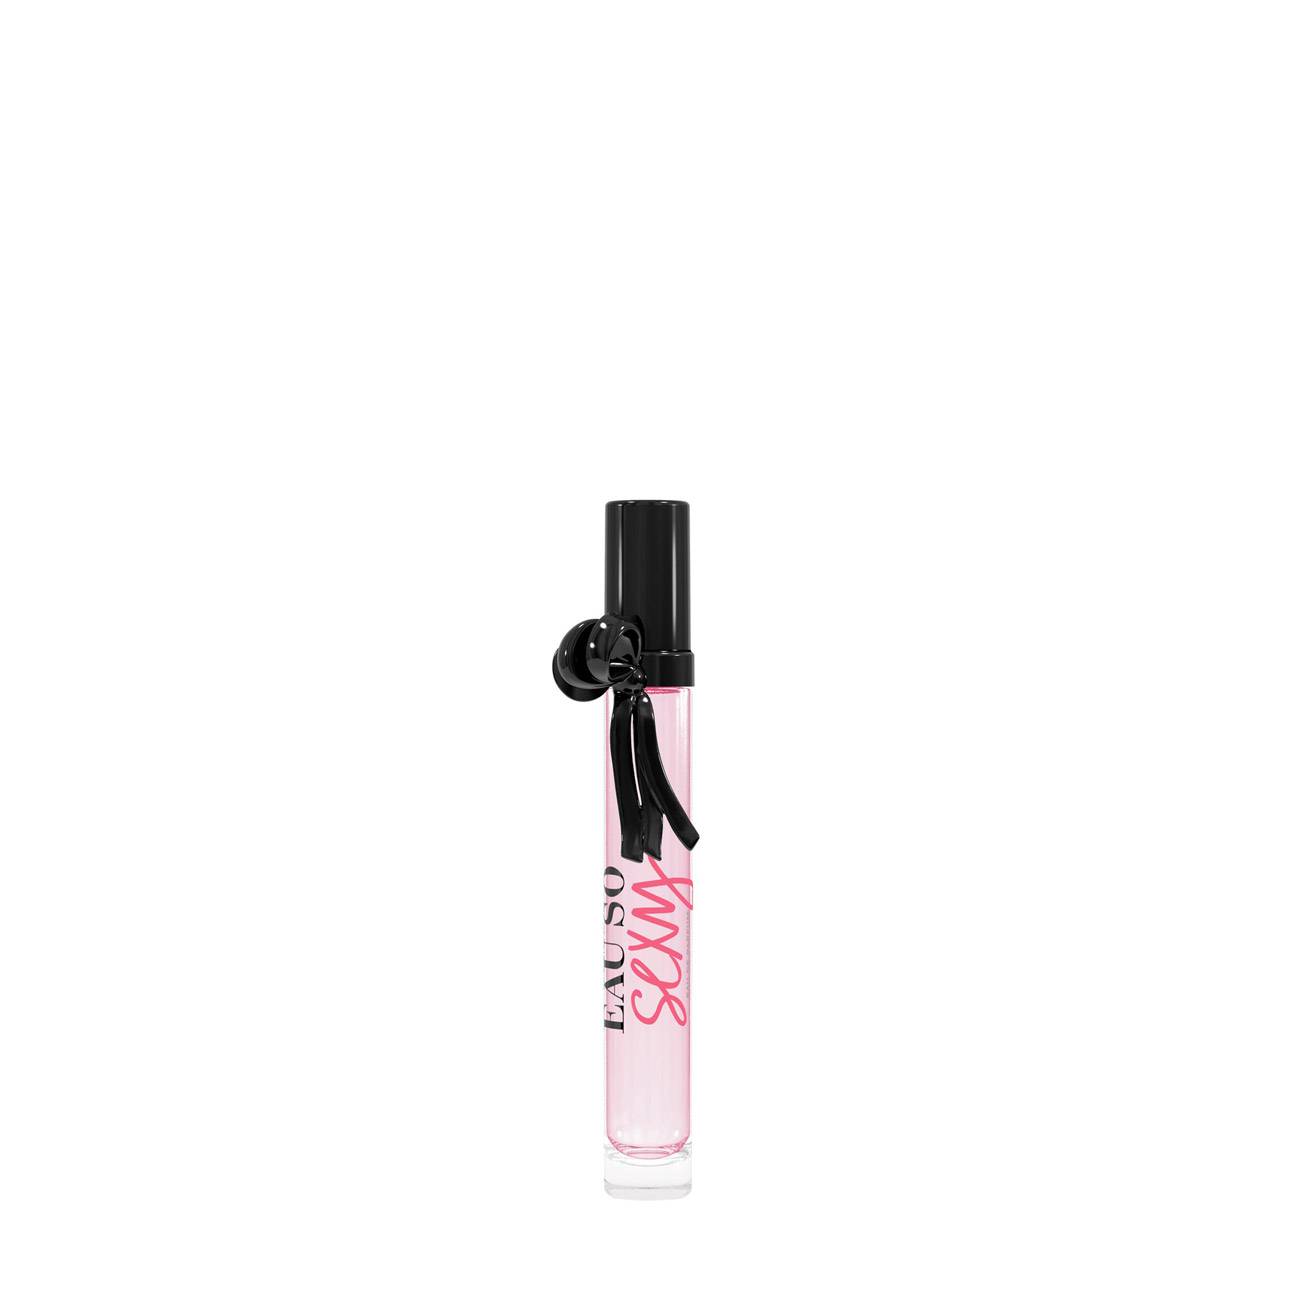 Apa de Parfum Victoria's Secret EAU SO SEXY ROLLERBALL 7ml cu comanda online